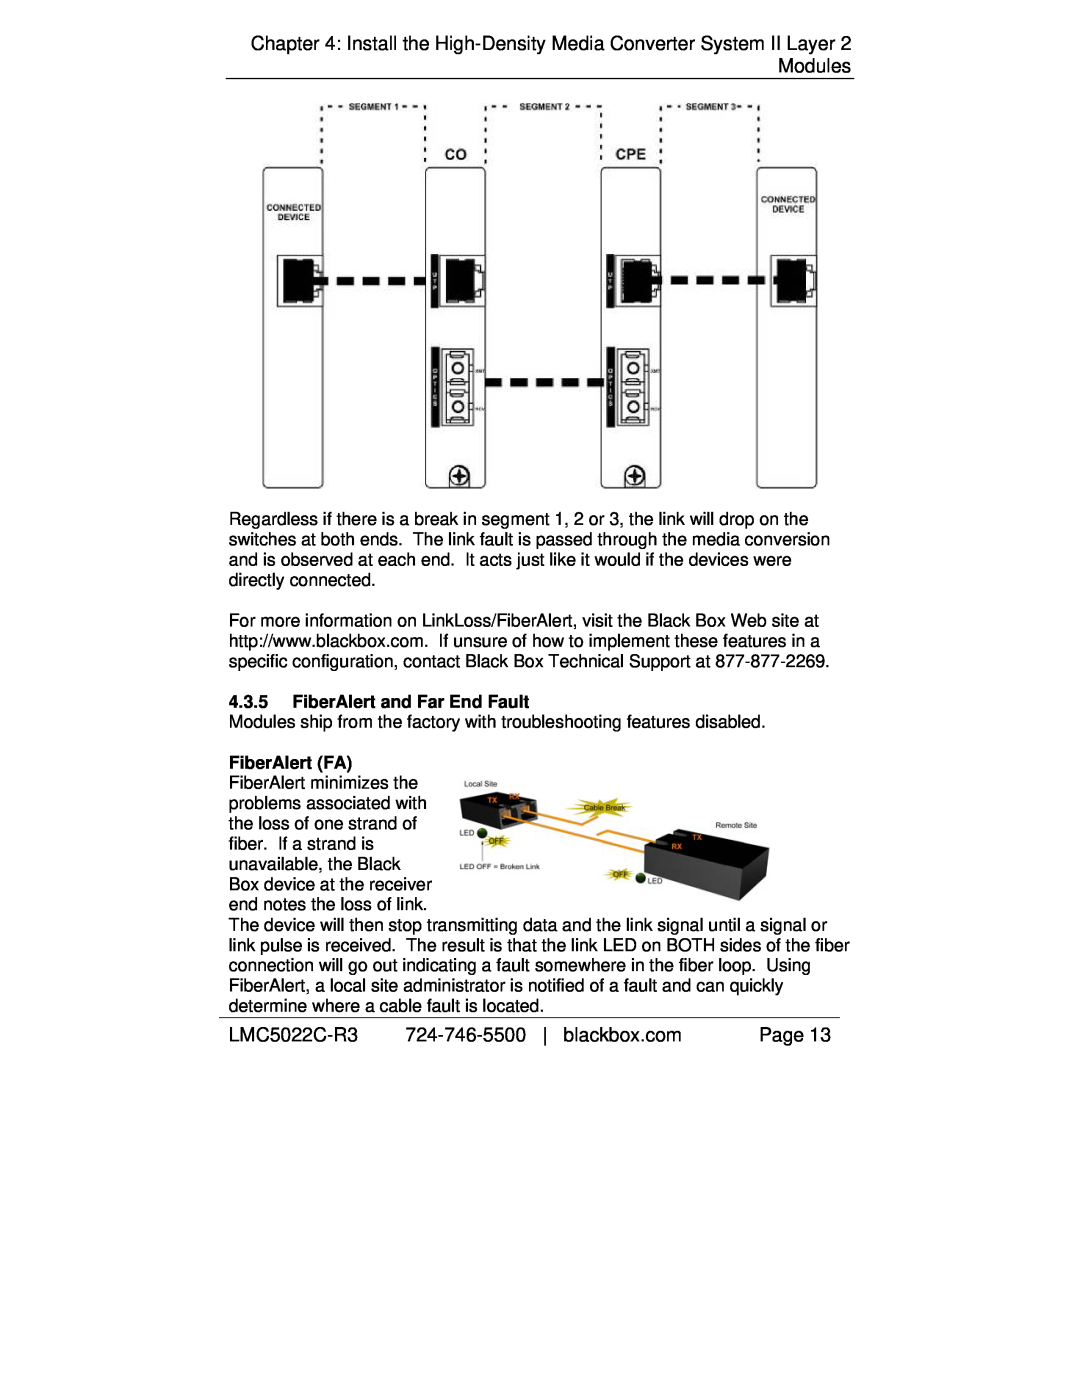 Black Box High-Density Media Converter System II, LMC5114C-R3 manual 4.3.5FiberAlert and Far End Fault, LMC5022C-R3, Page 